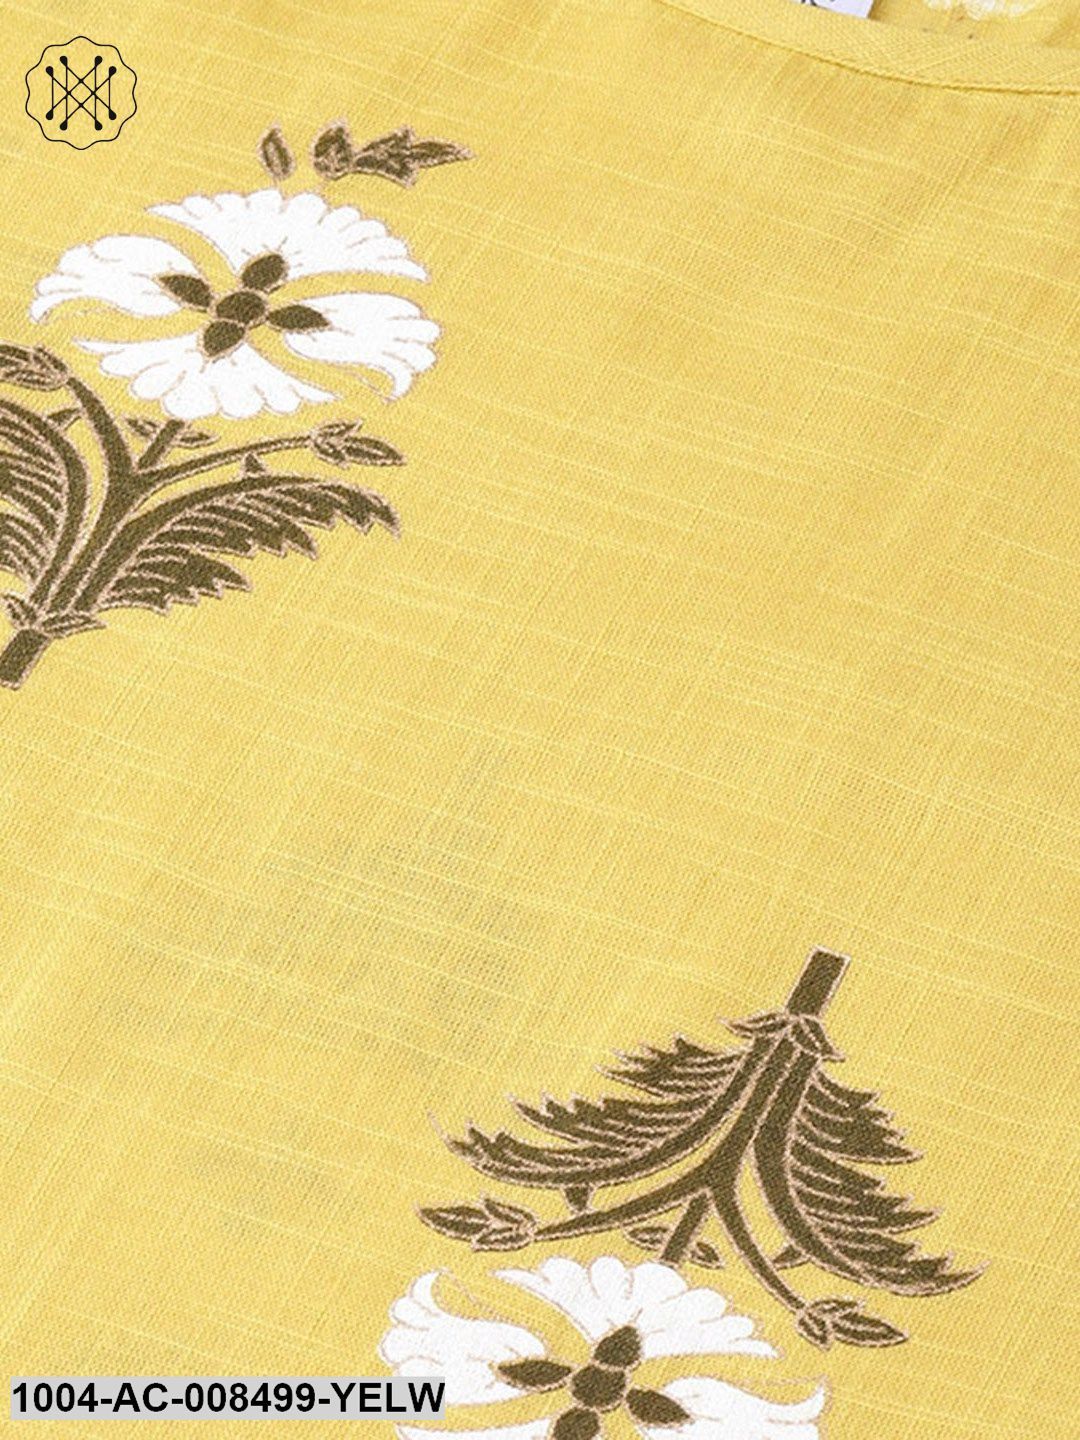 Yellow Printed Half Sleeve Cotton Maxi Dress